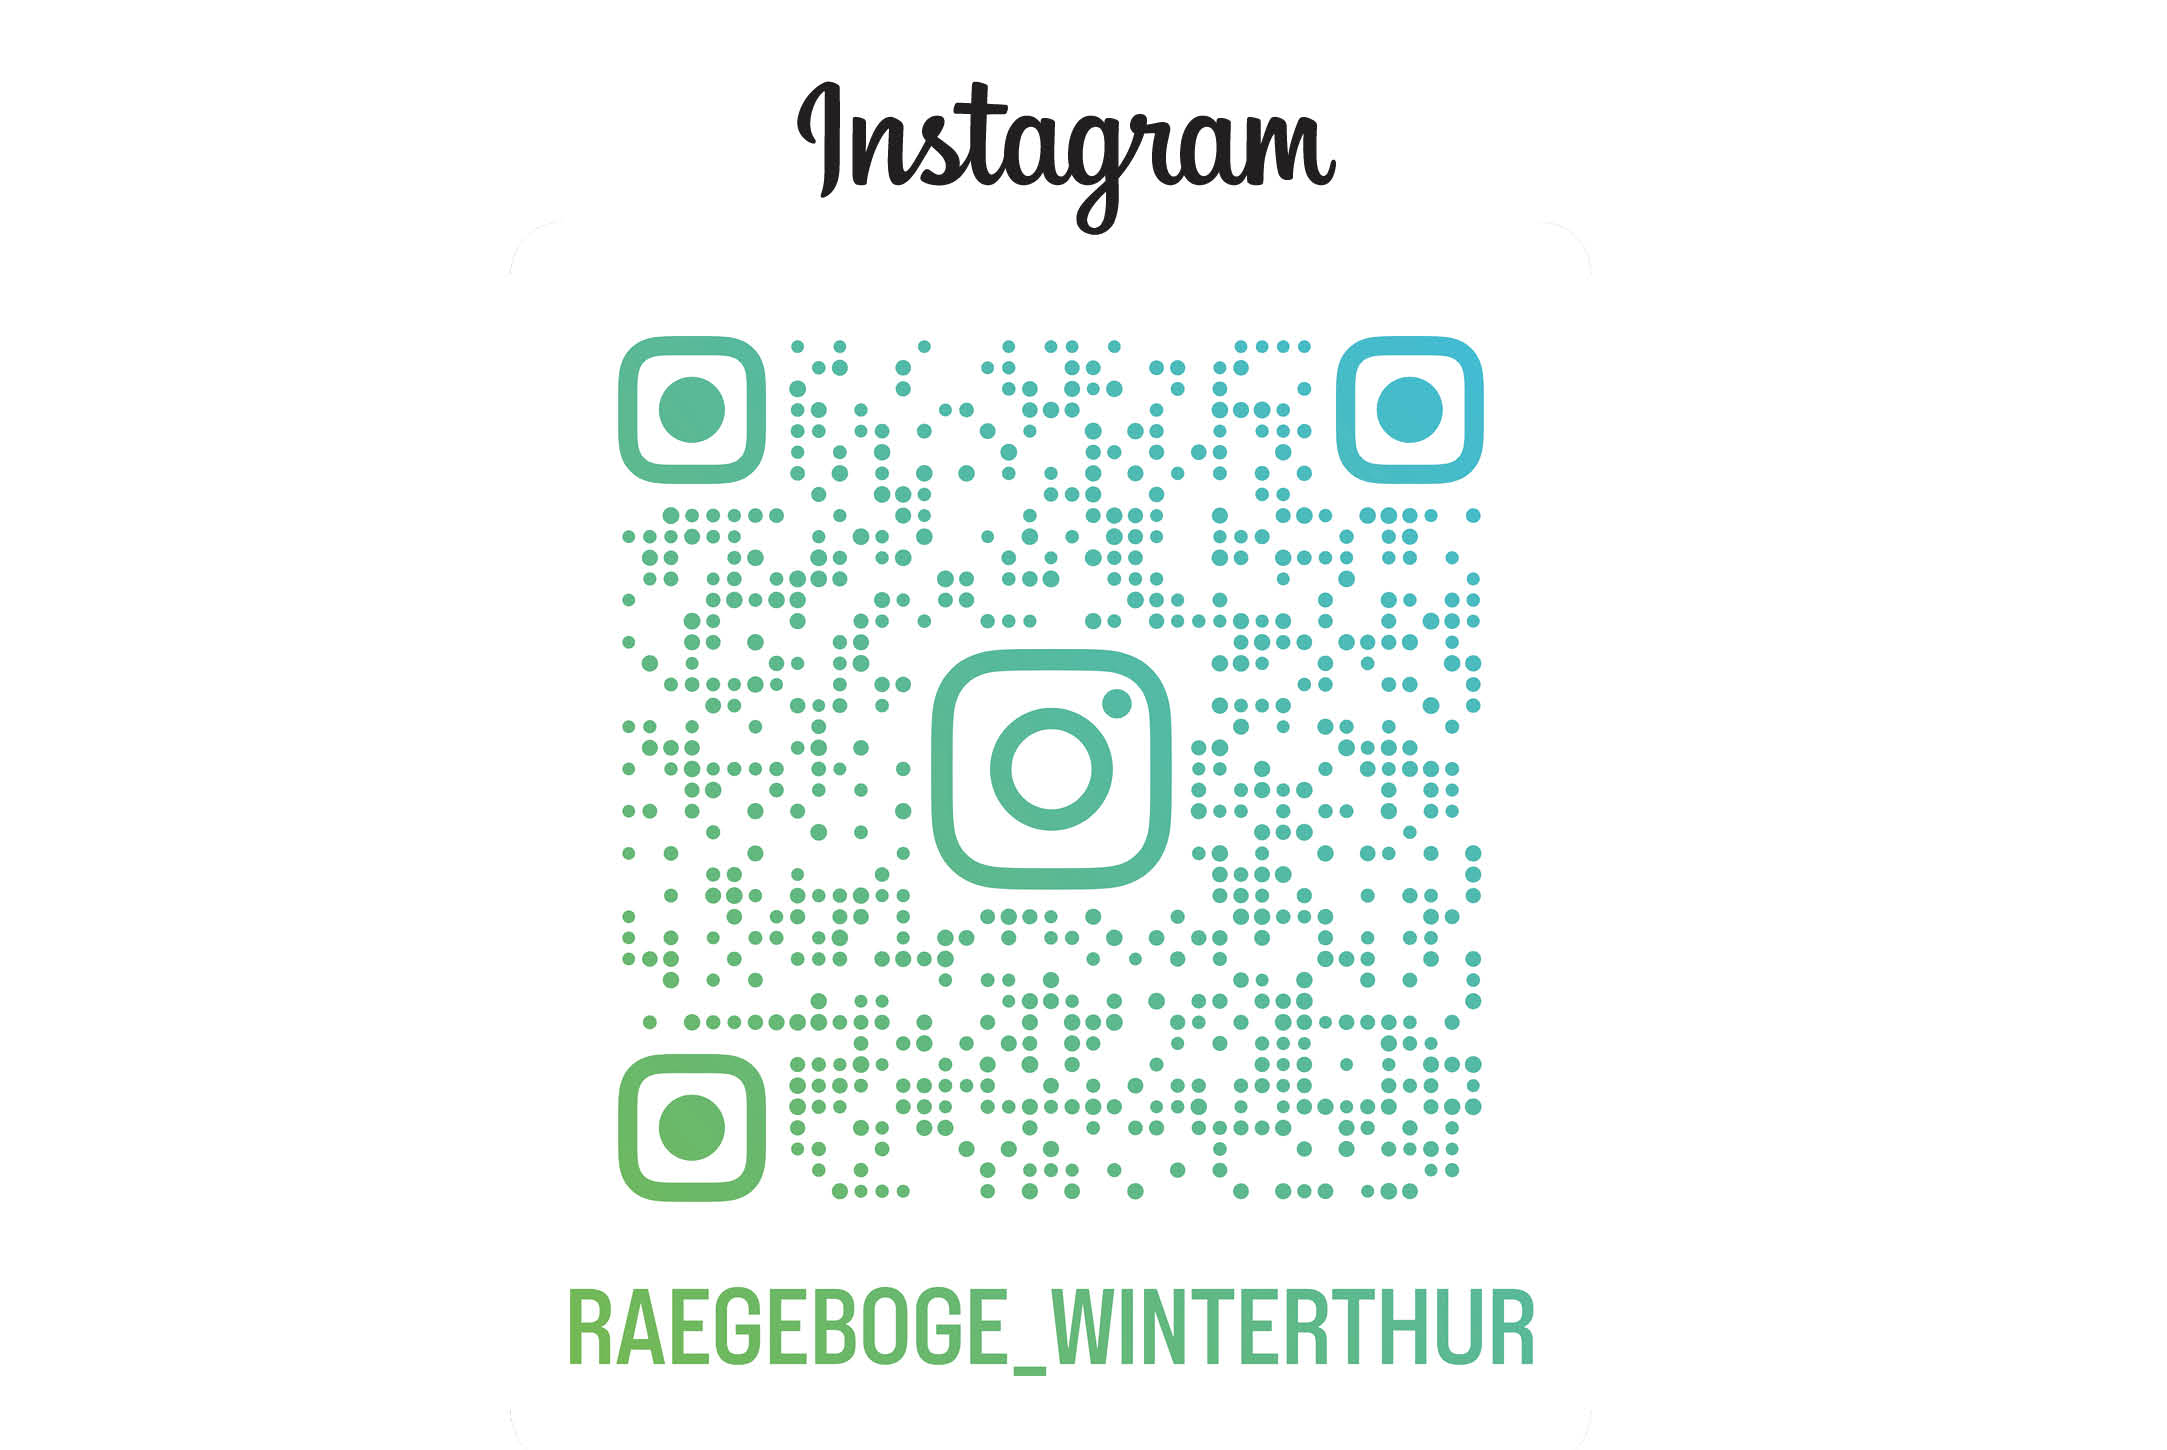 Raegeboge auf Instagram